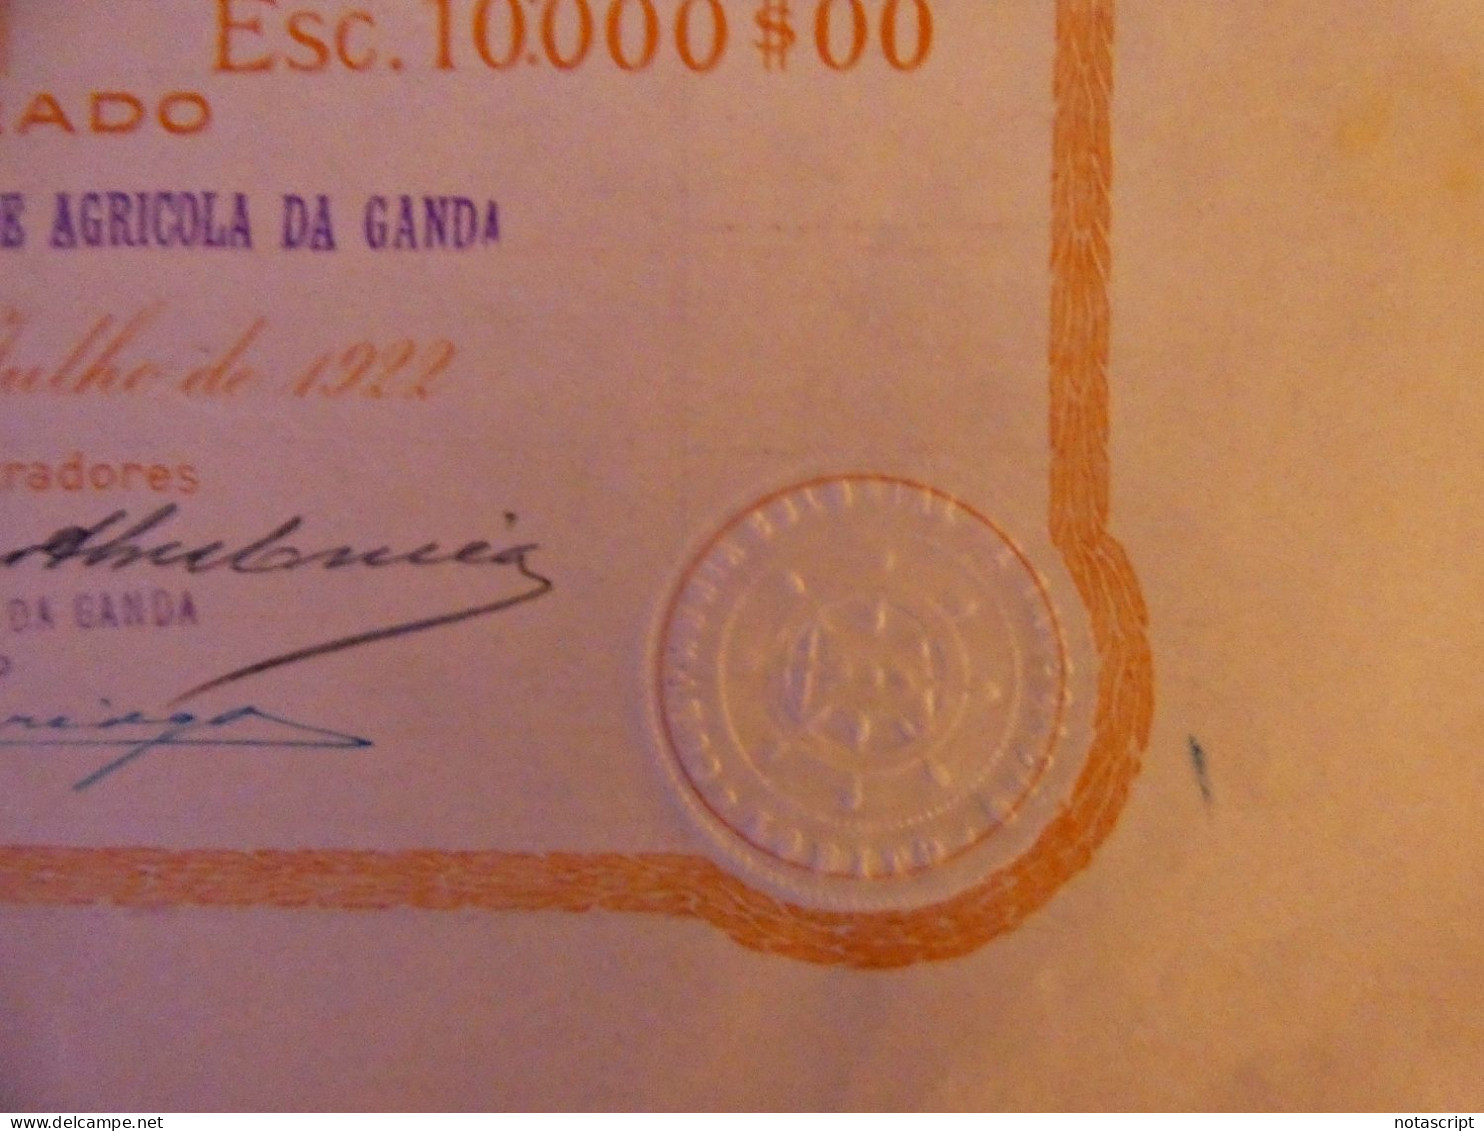 COMPANHIA COLONIAL  DE NAVEGAÇAO SA ,Lobito (Portuguese Angola)    1922 share Certificate - Navegación